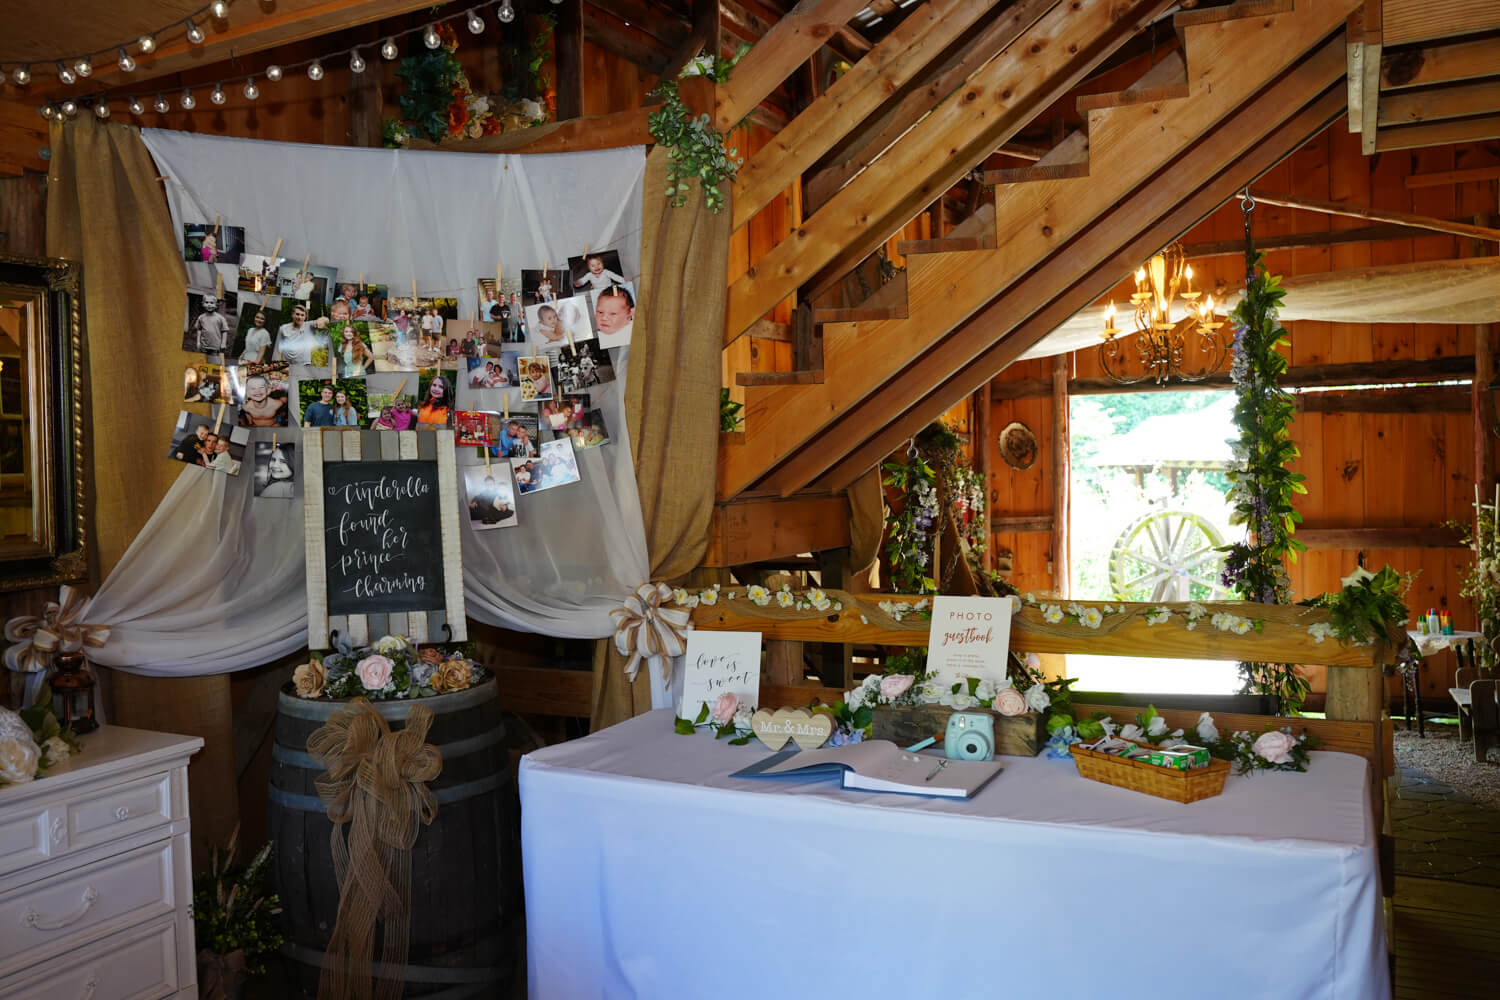 Wedding decor set up in a country barn wedding venue